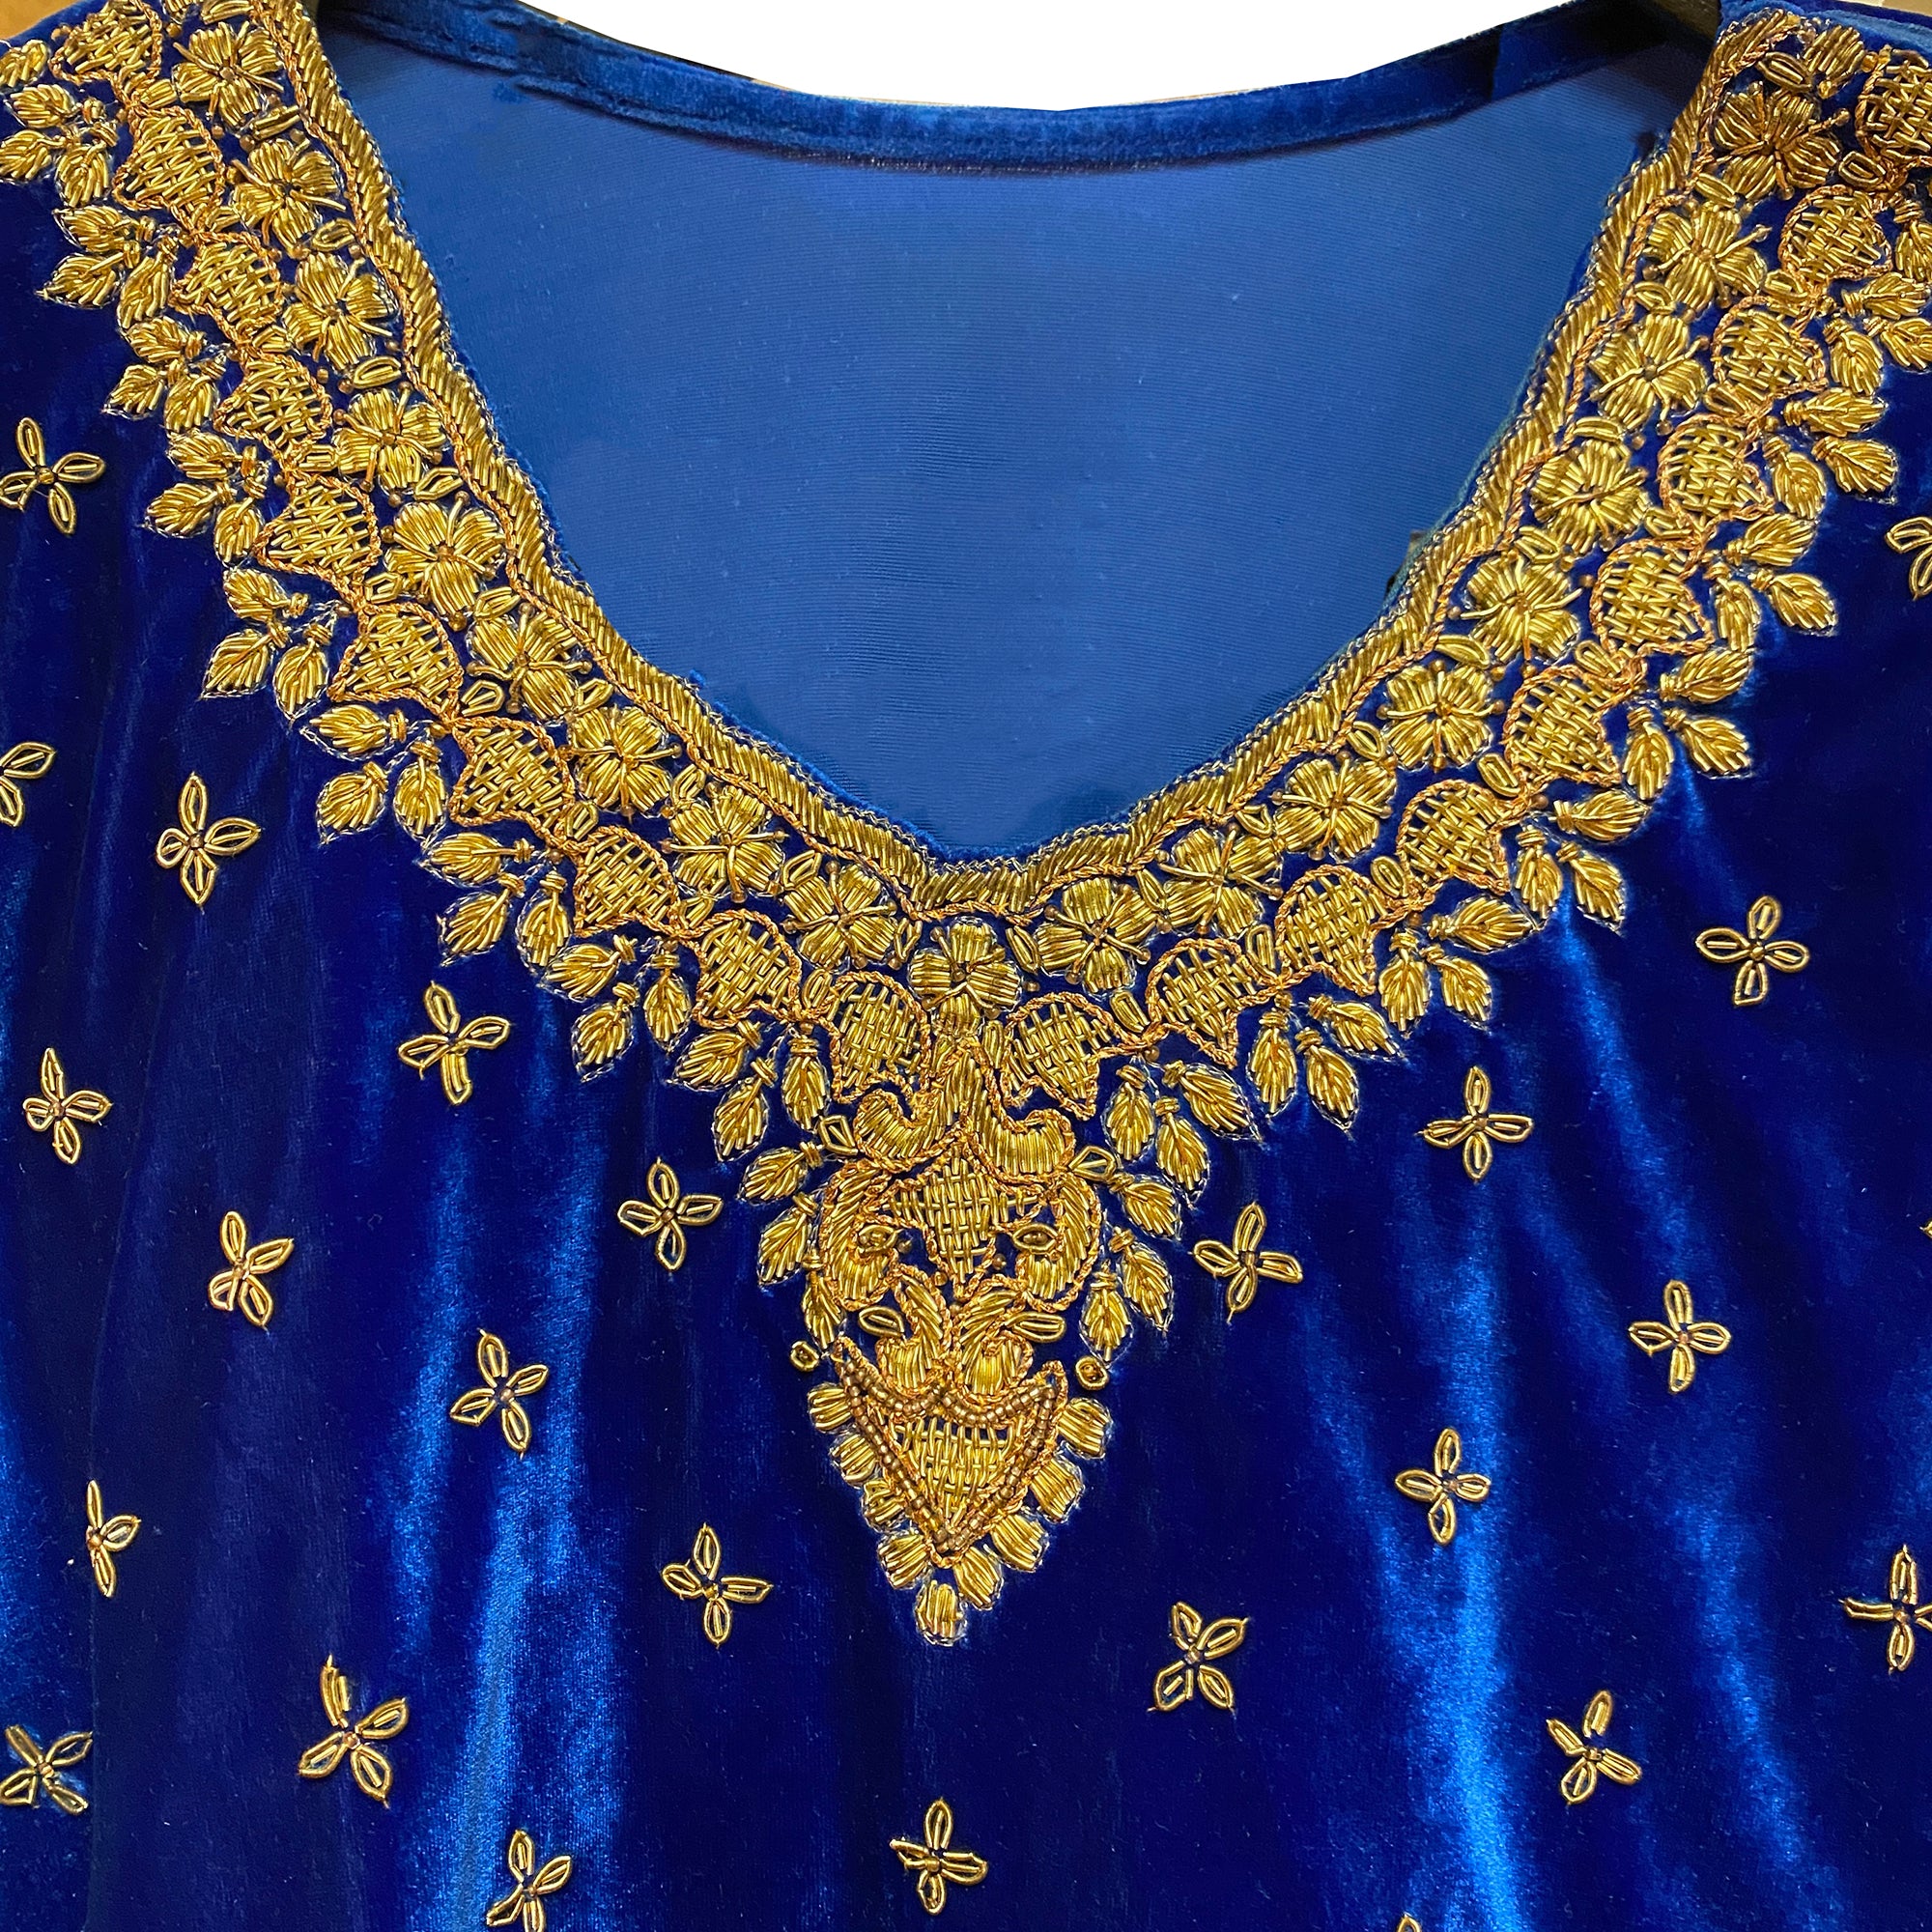 Royal Velvet Top with Zardosi Embroidery - Vintage India NYC